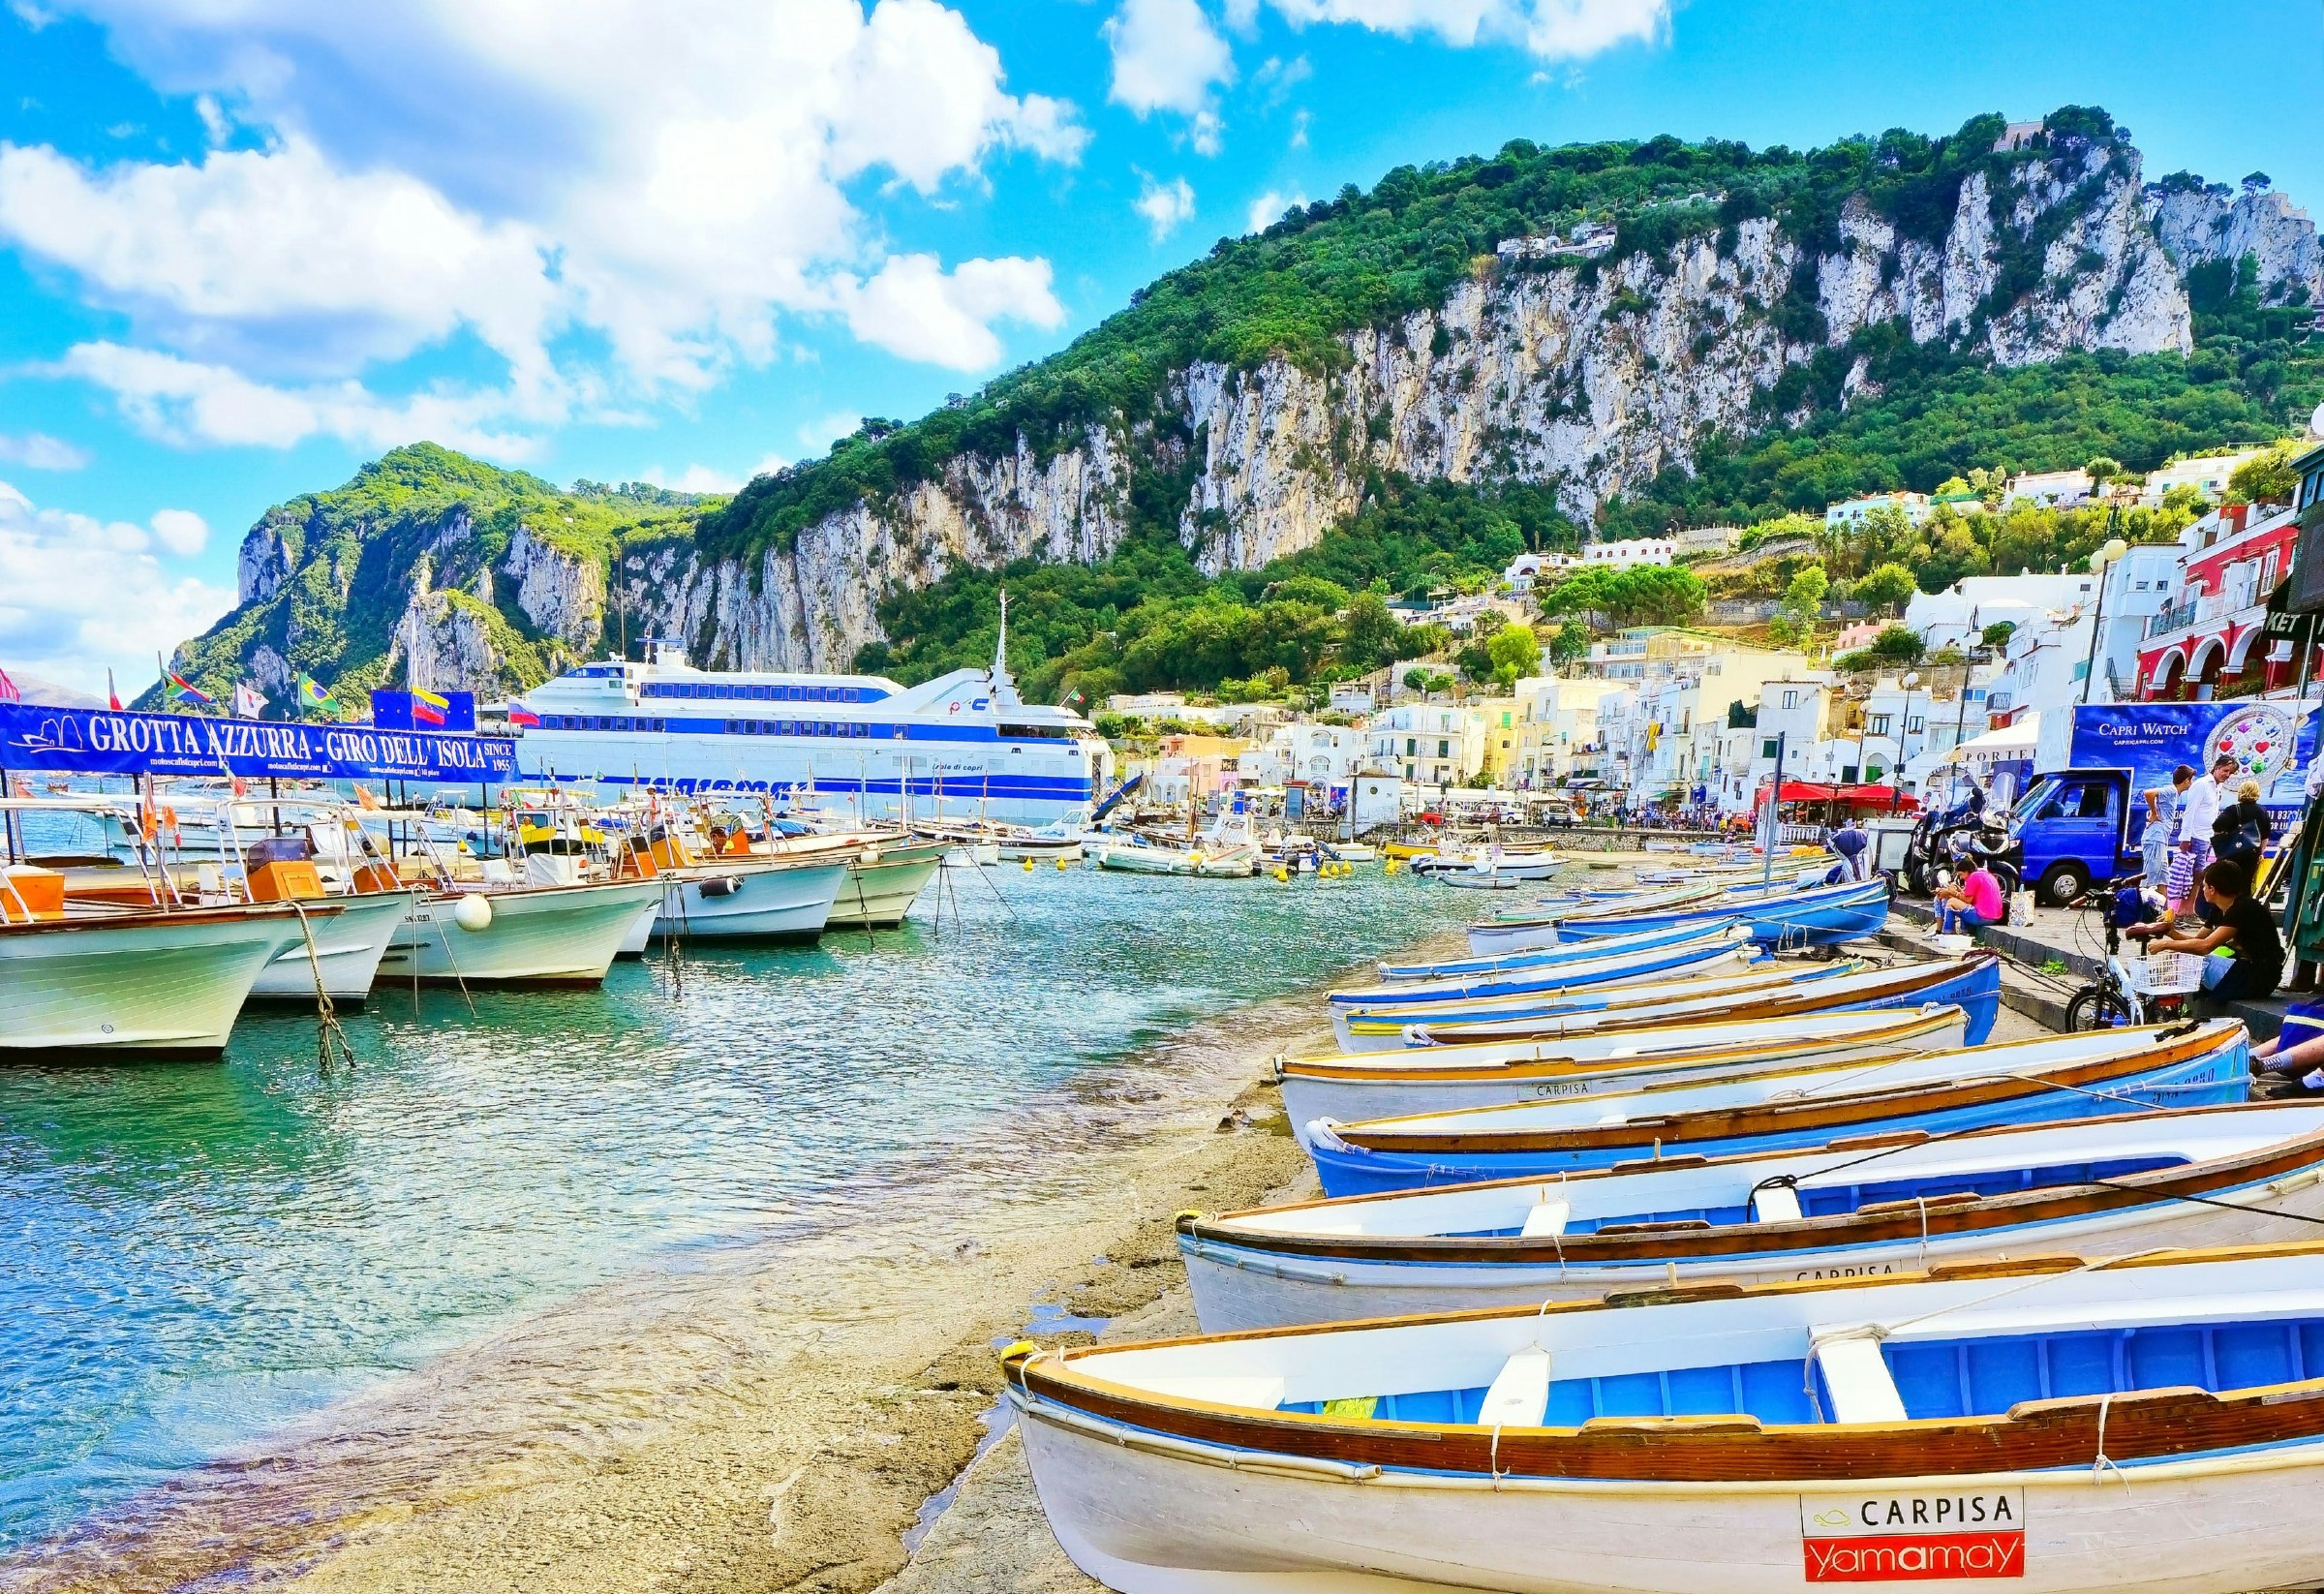 Travel News - island of capri